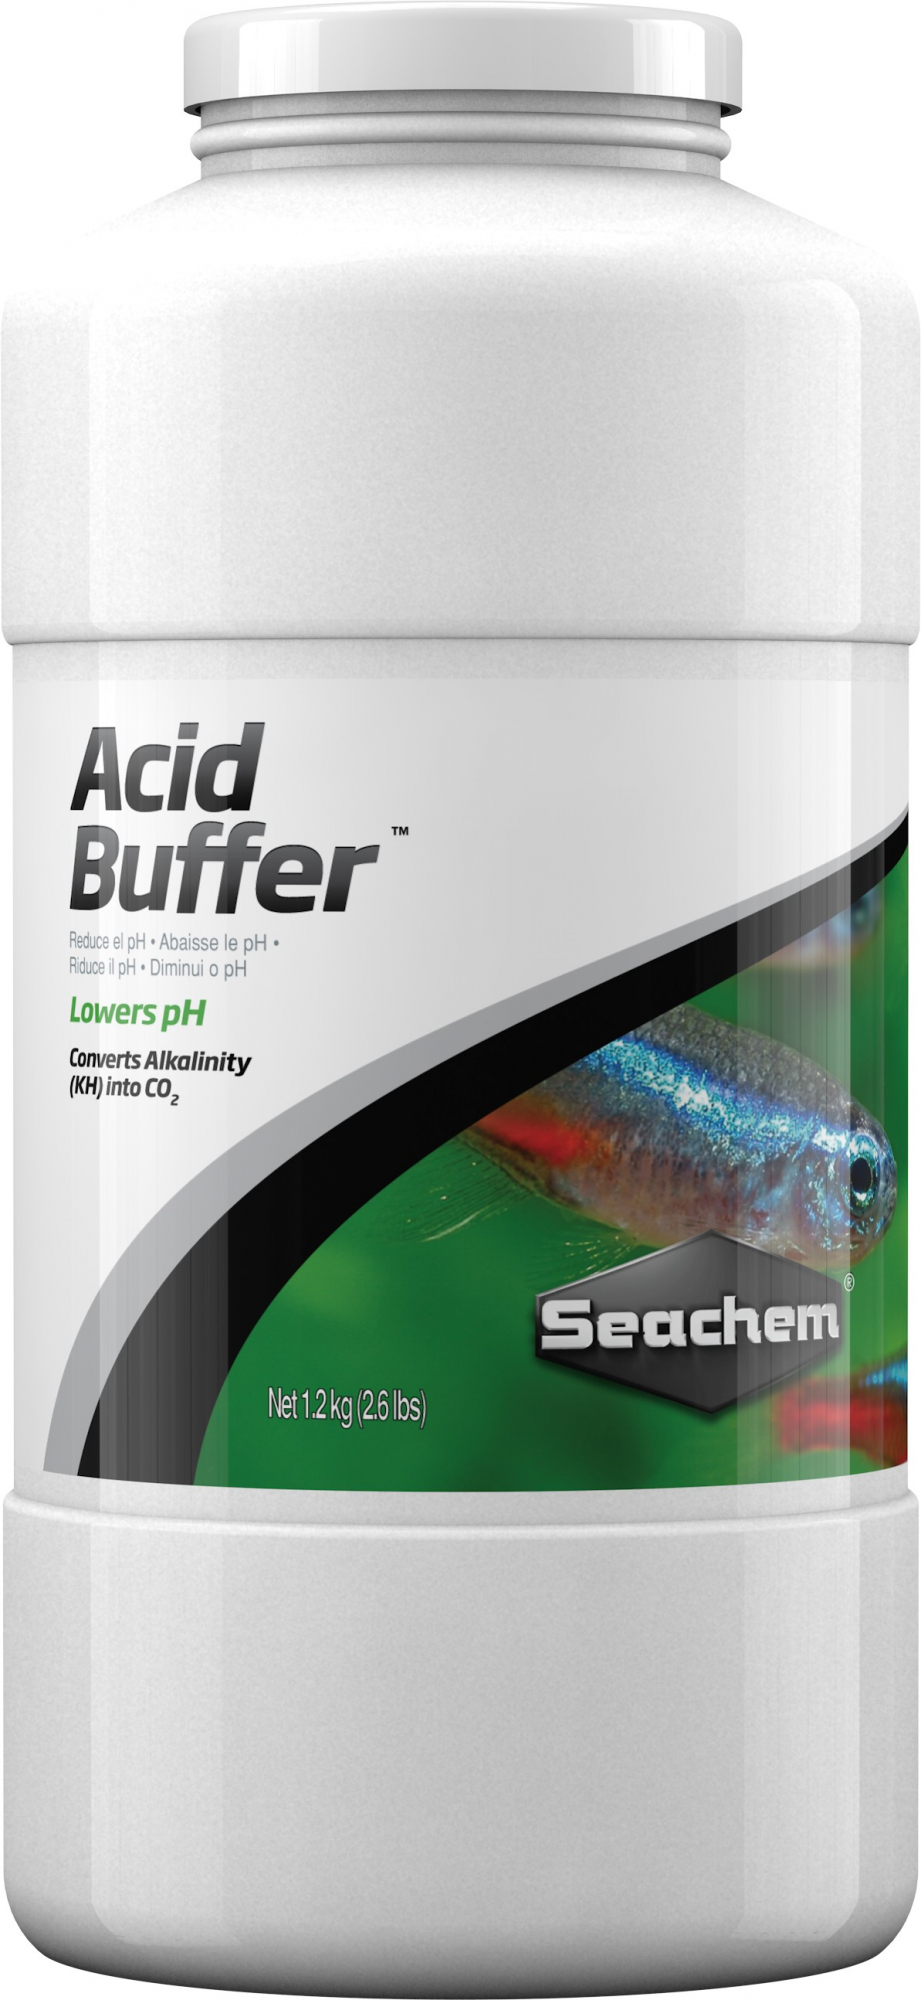 Acid Buffer - SEACHEM - disminución, del PH